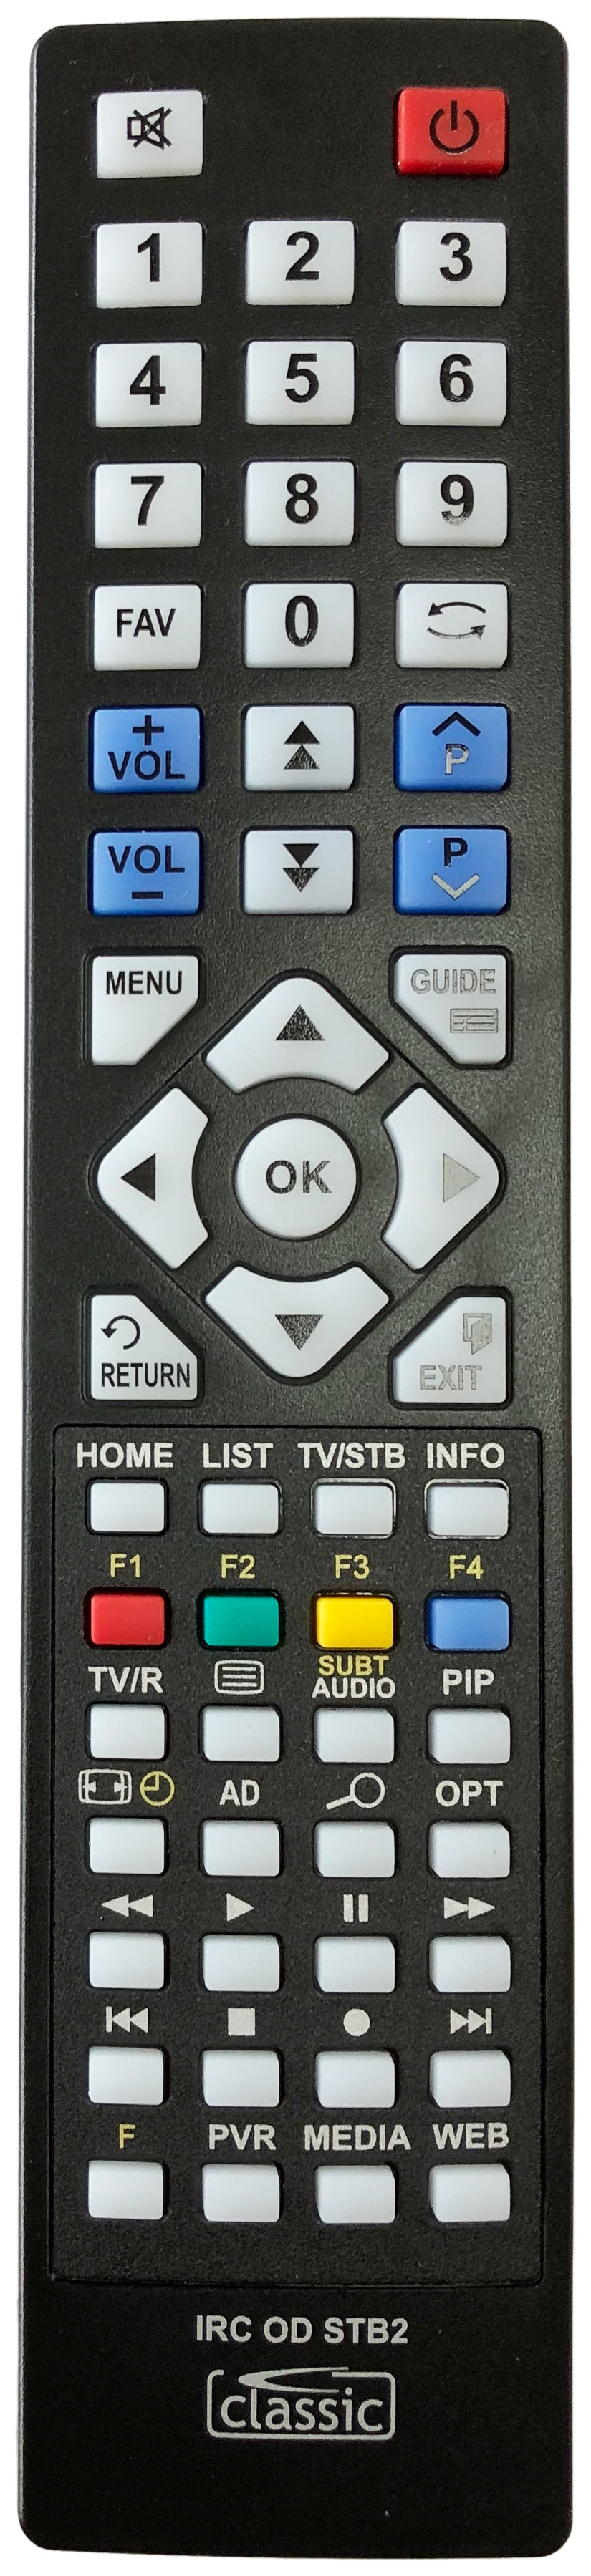 HUMAX RM-I02S Remote Control